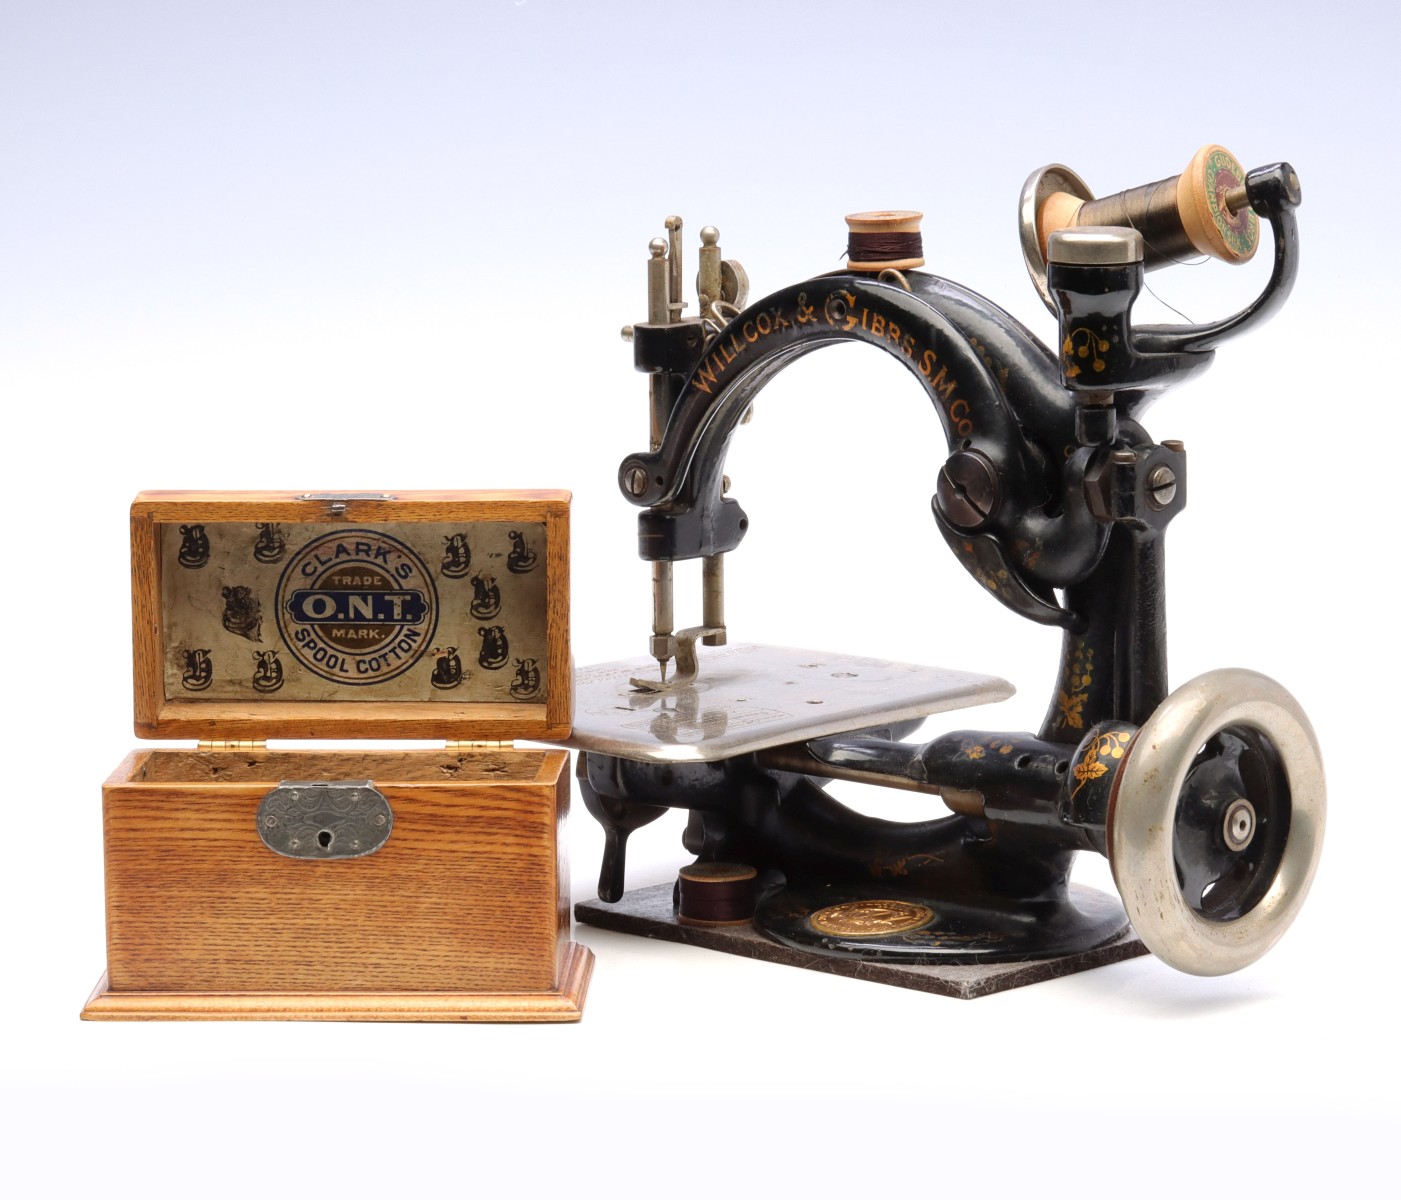 A WILLCOX & GIBBS SEWING MACHINE, CIRCA 1894